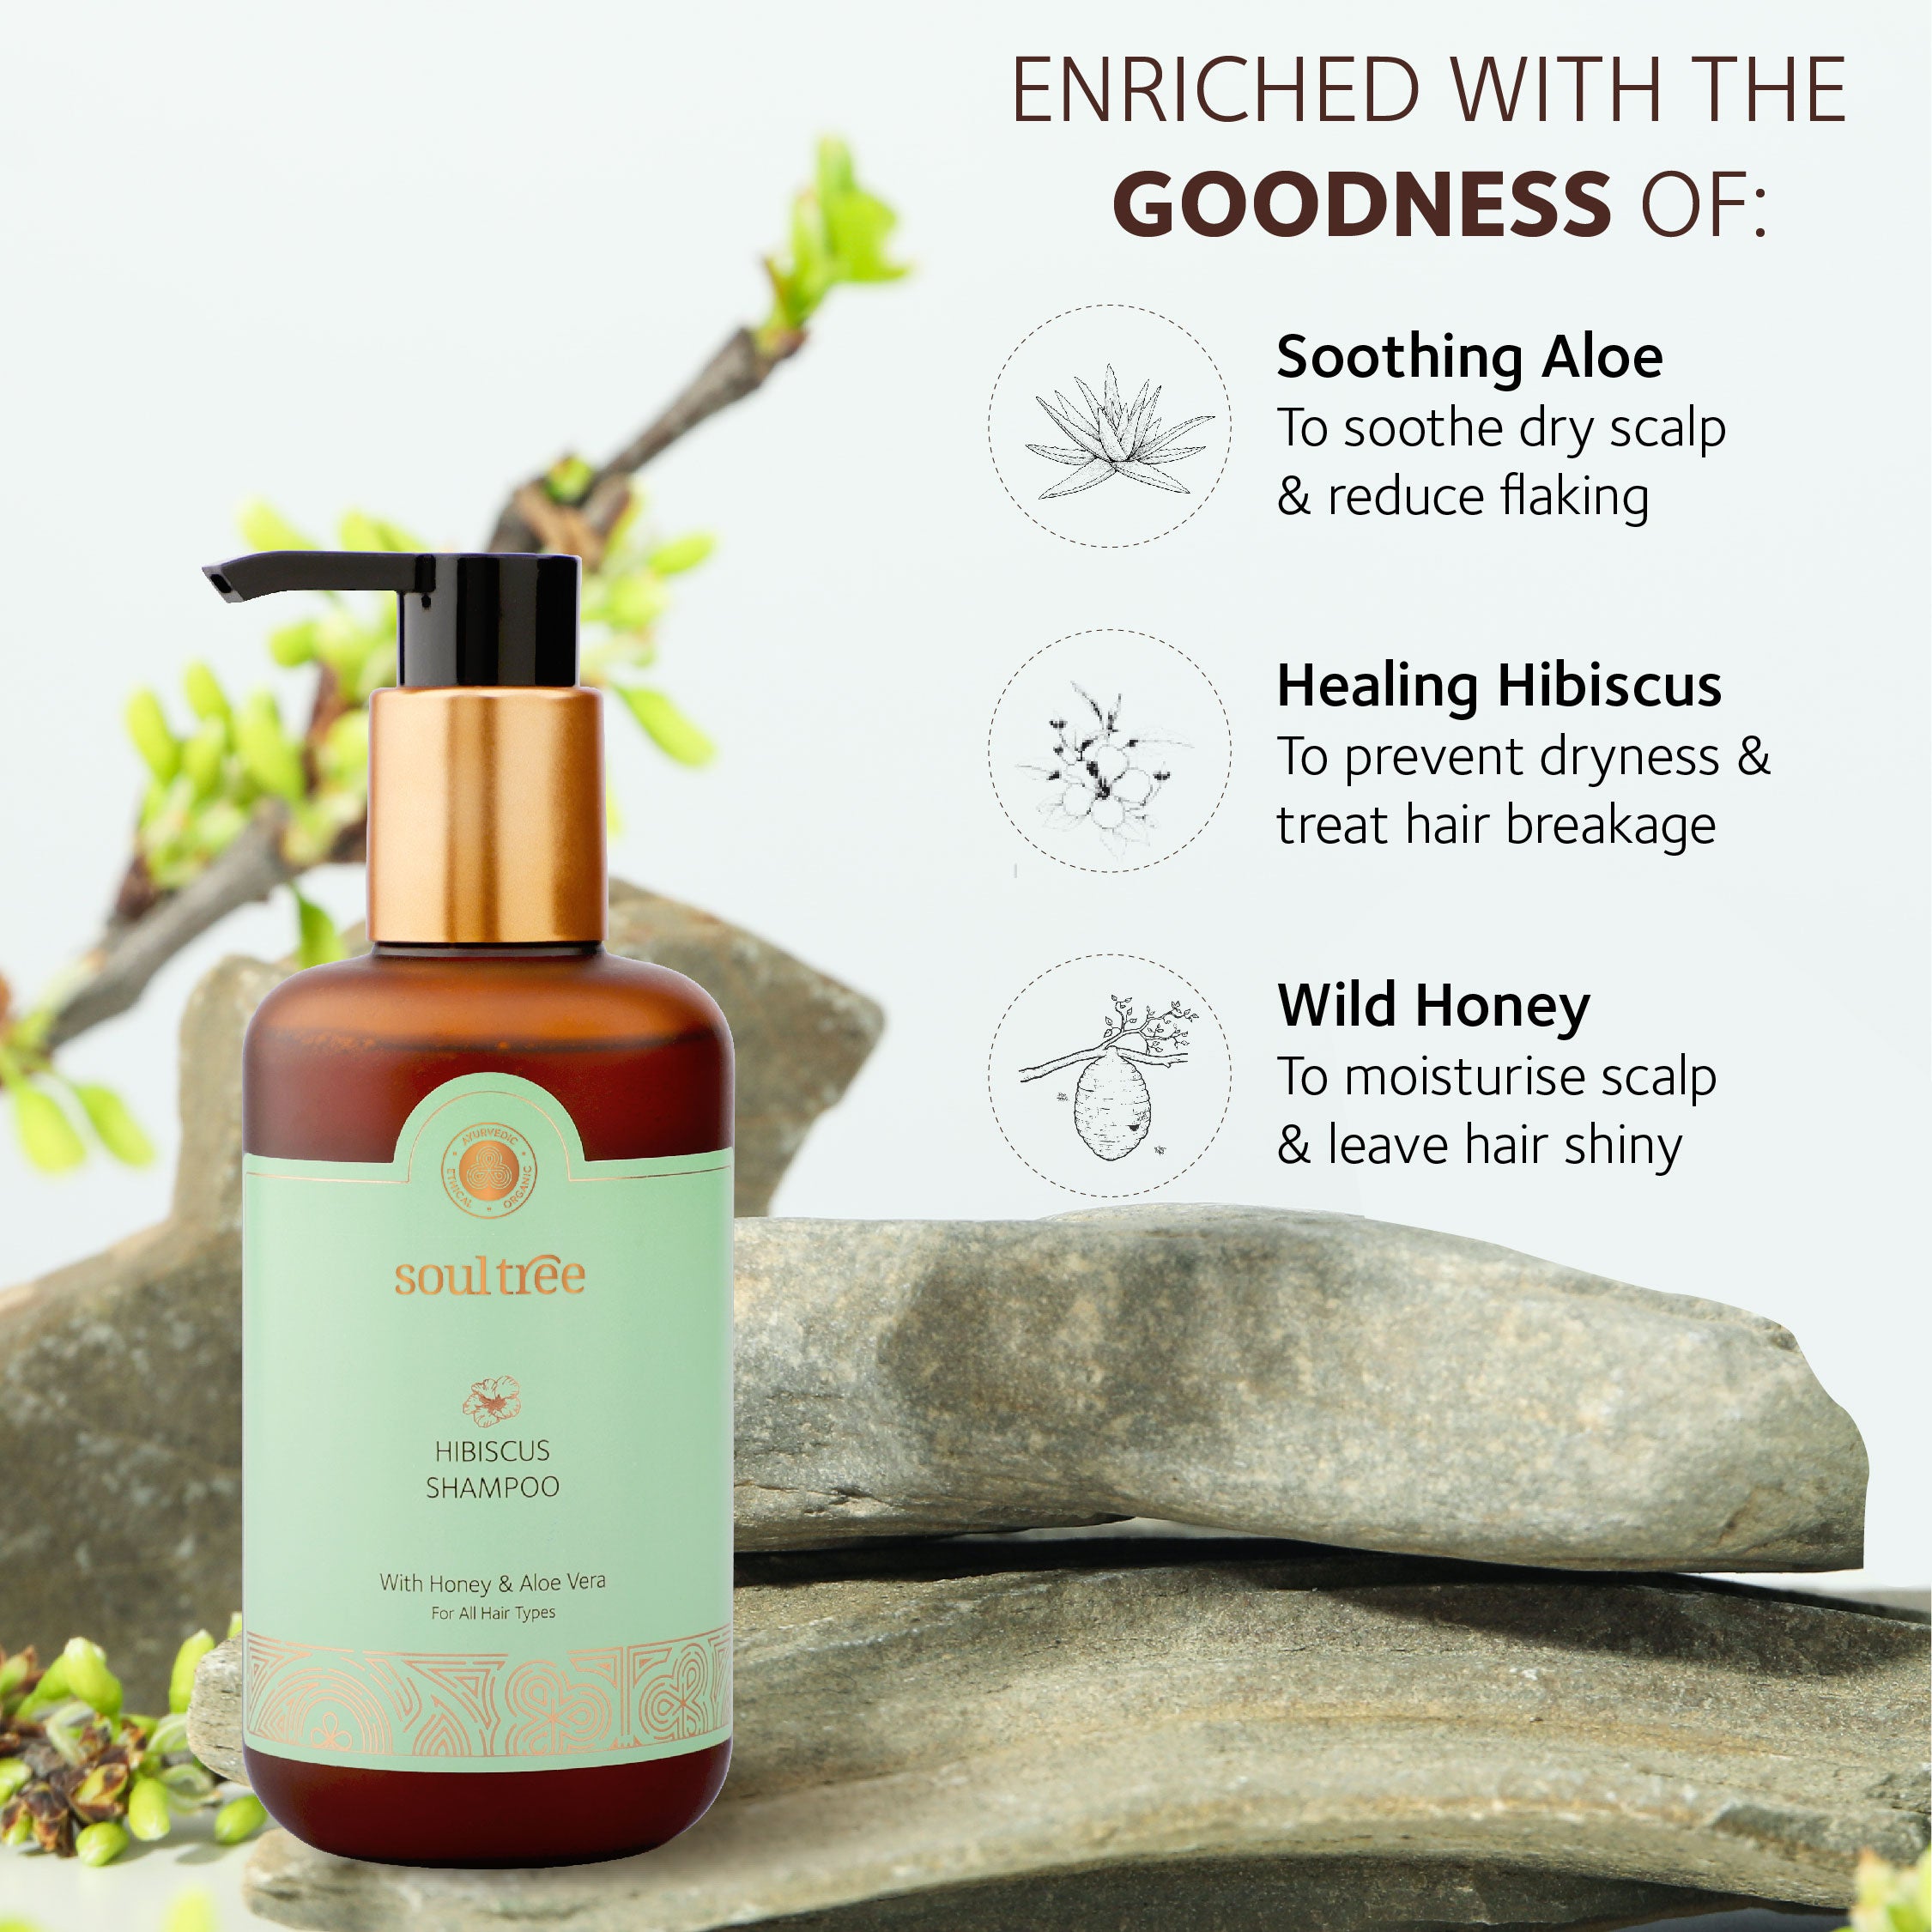 Hibiscus Shampoo with Honey and Aloe Vera - SoulTree